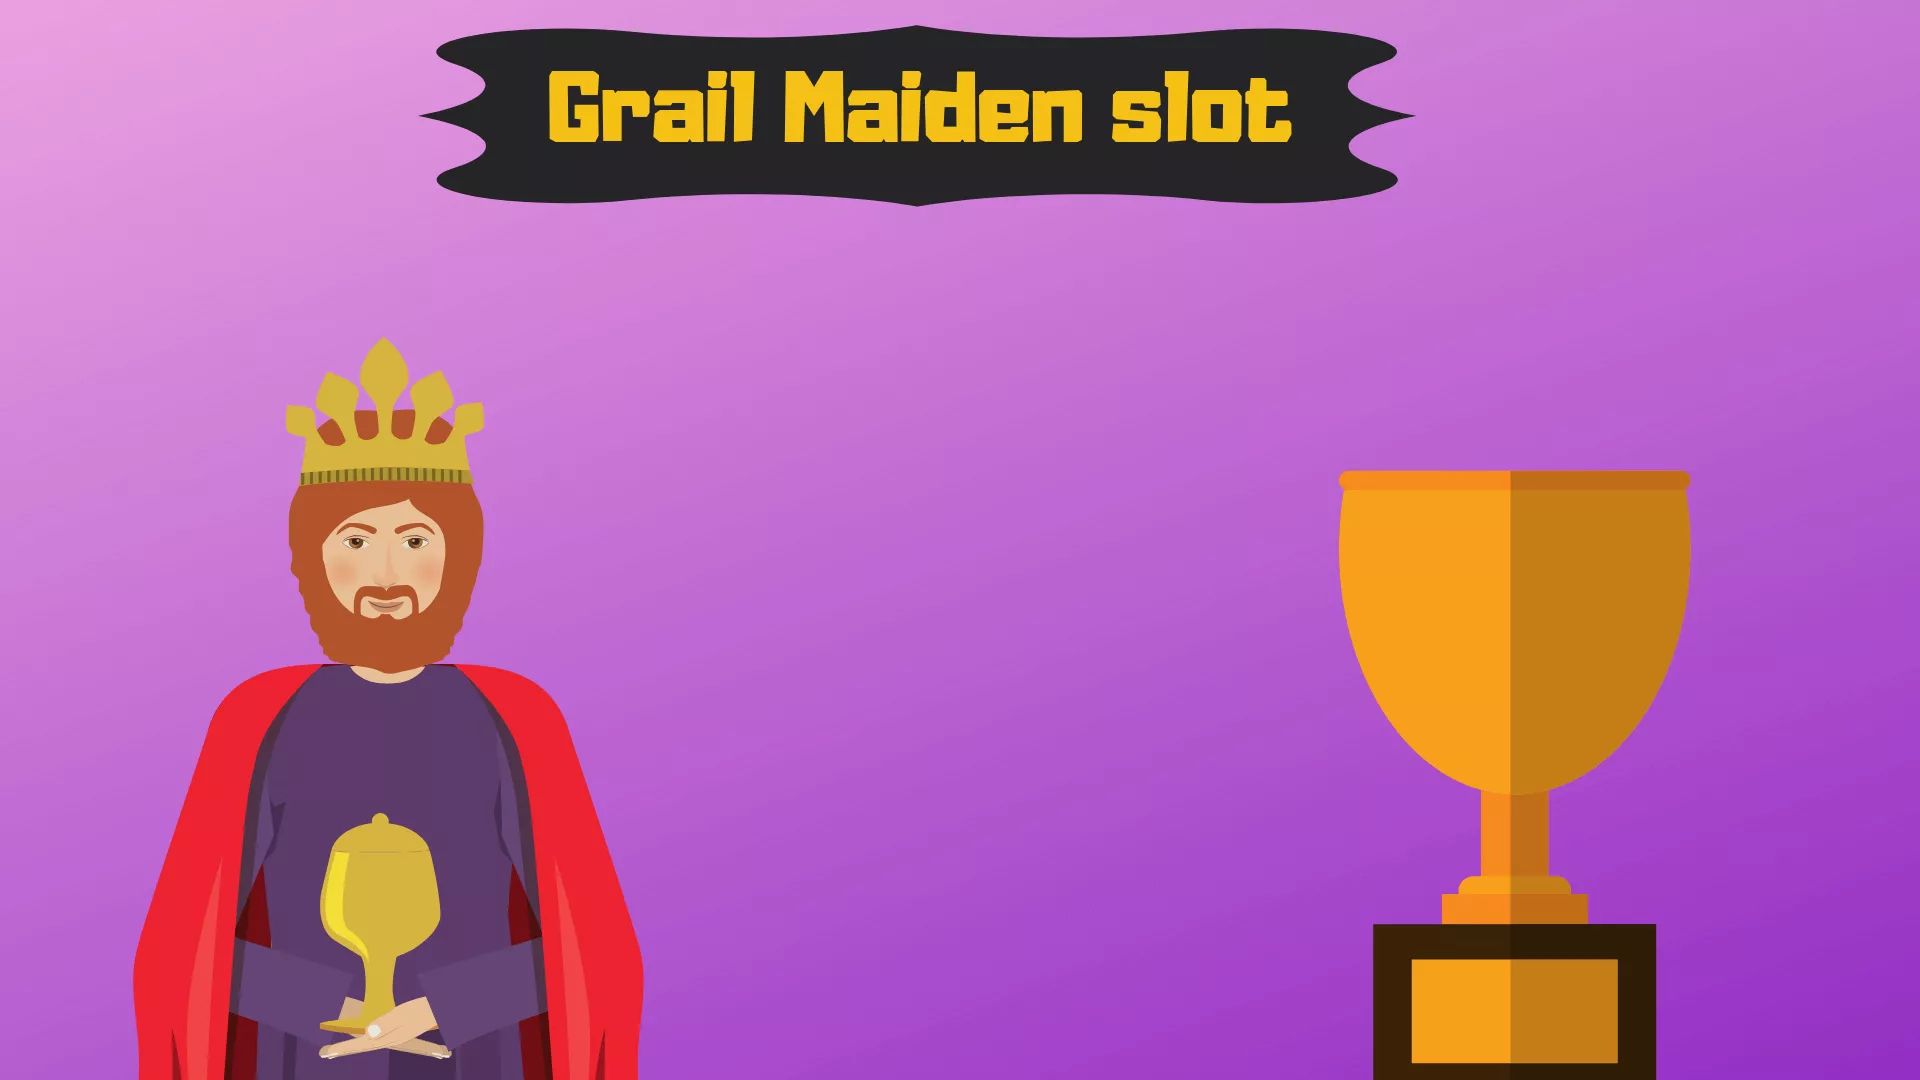 Grail Maiden slot